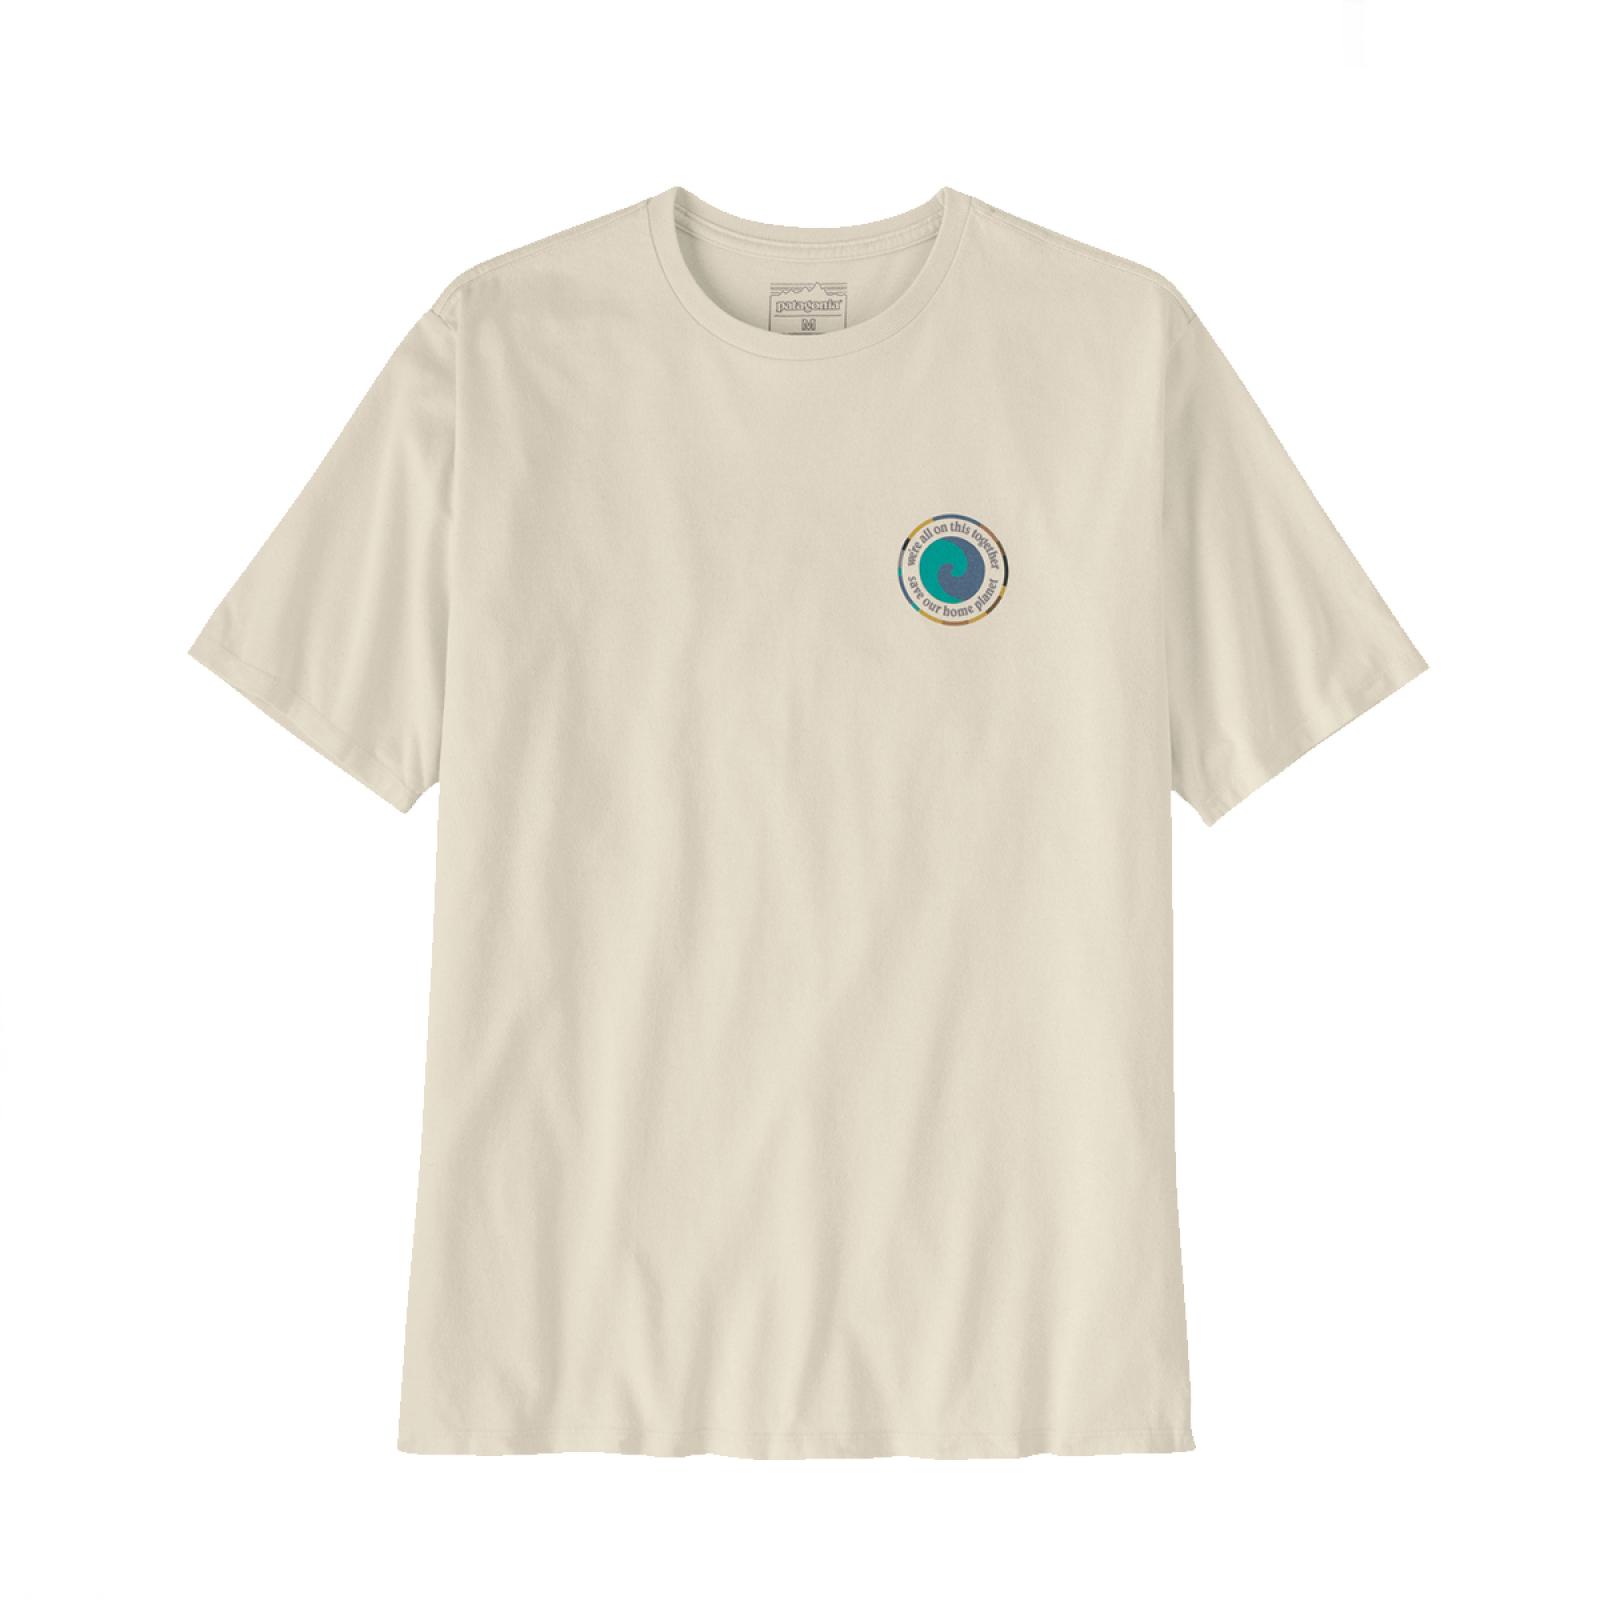 Patagonia T-Shirt Unity Fitz Responsibili-Tee® Birch White - 1